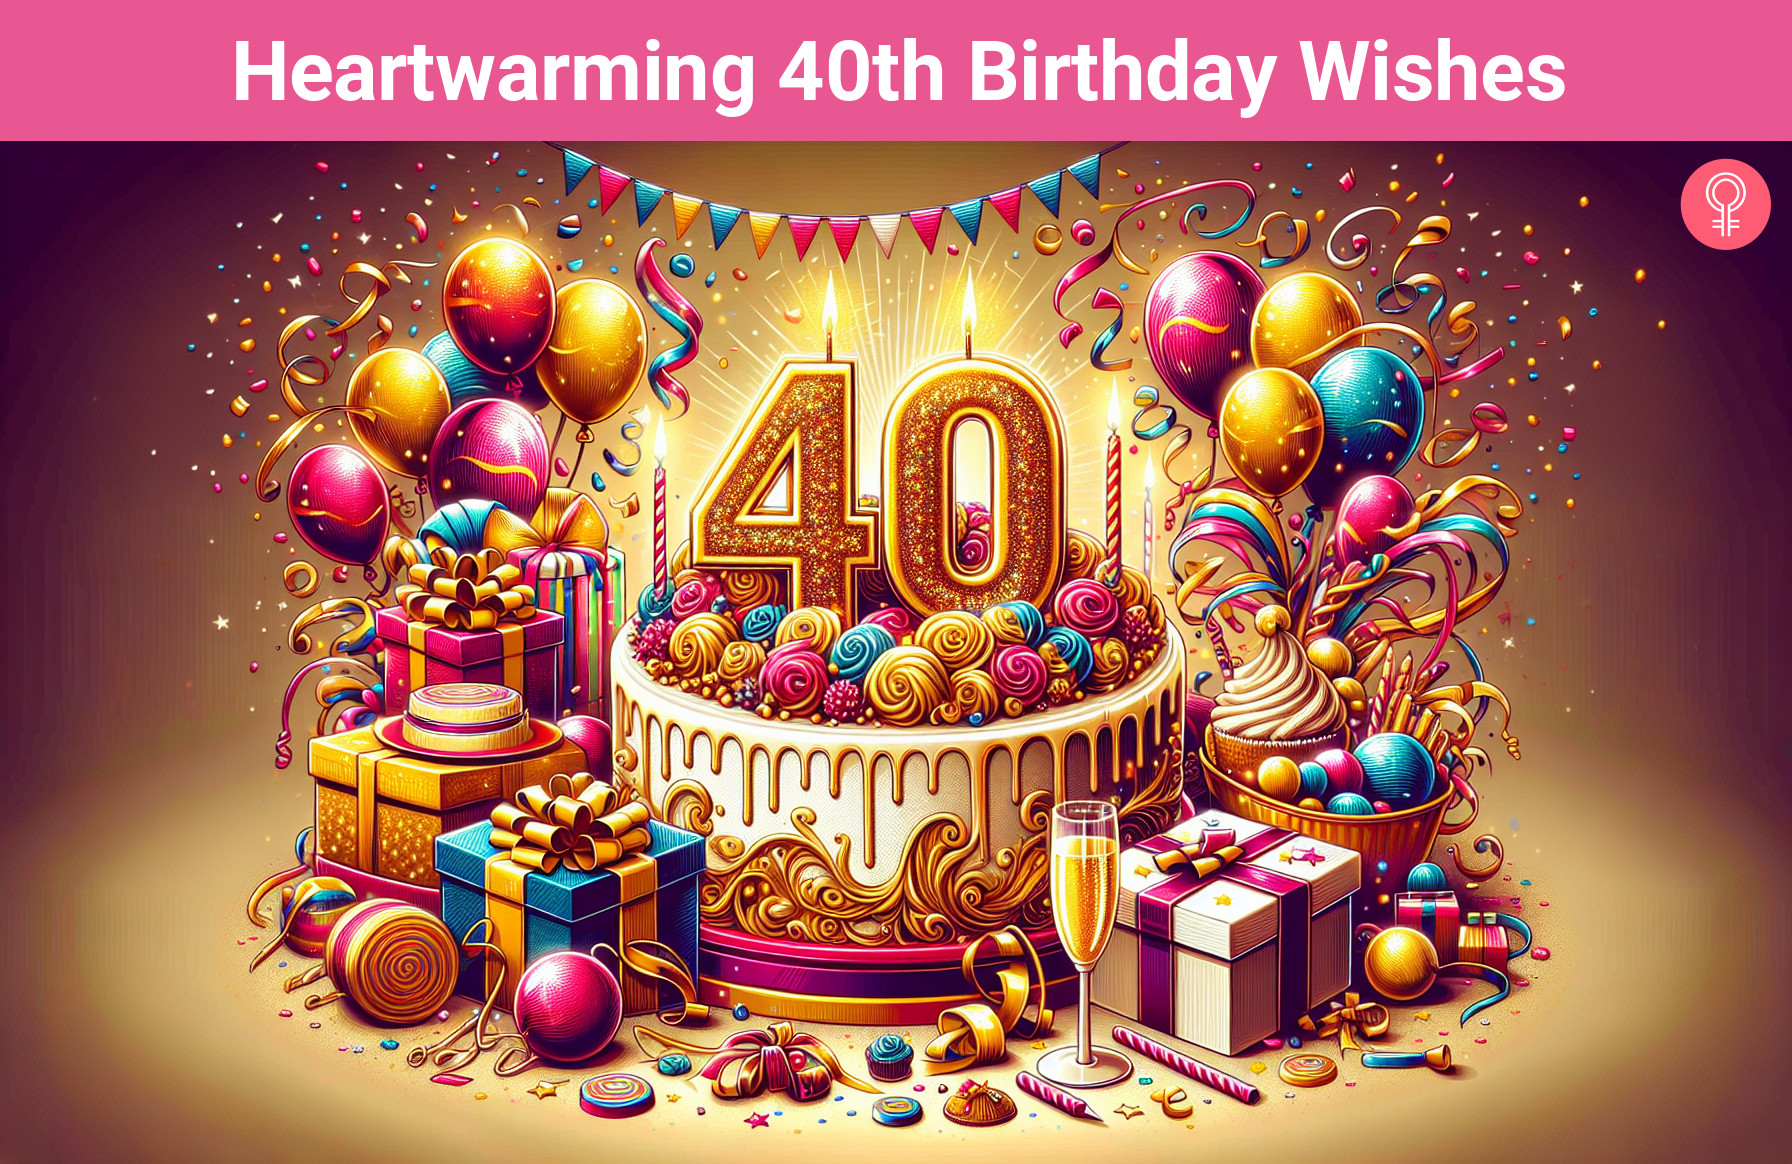 40th birthday wishes_illustration